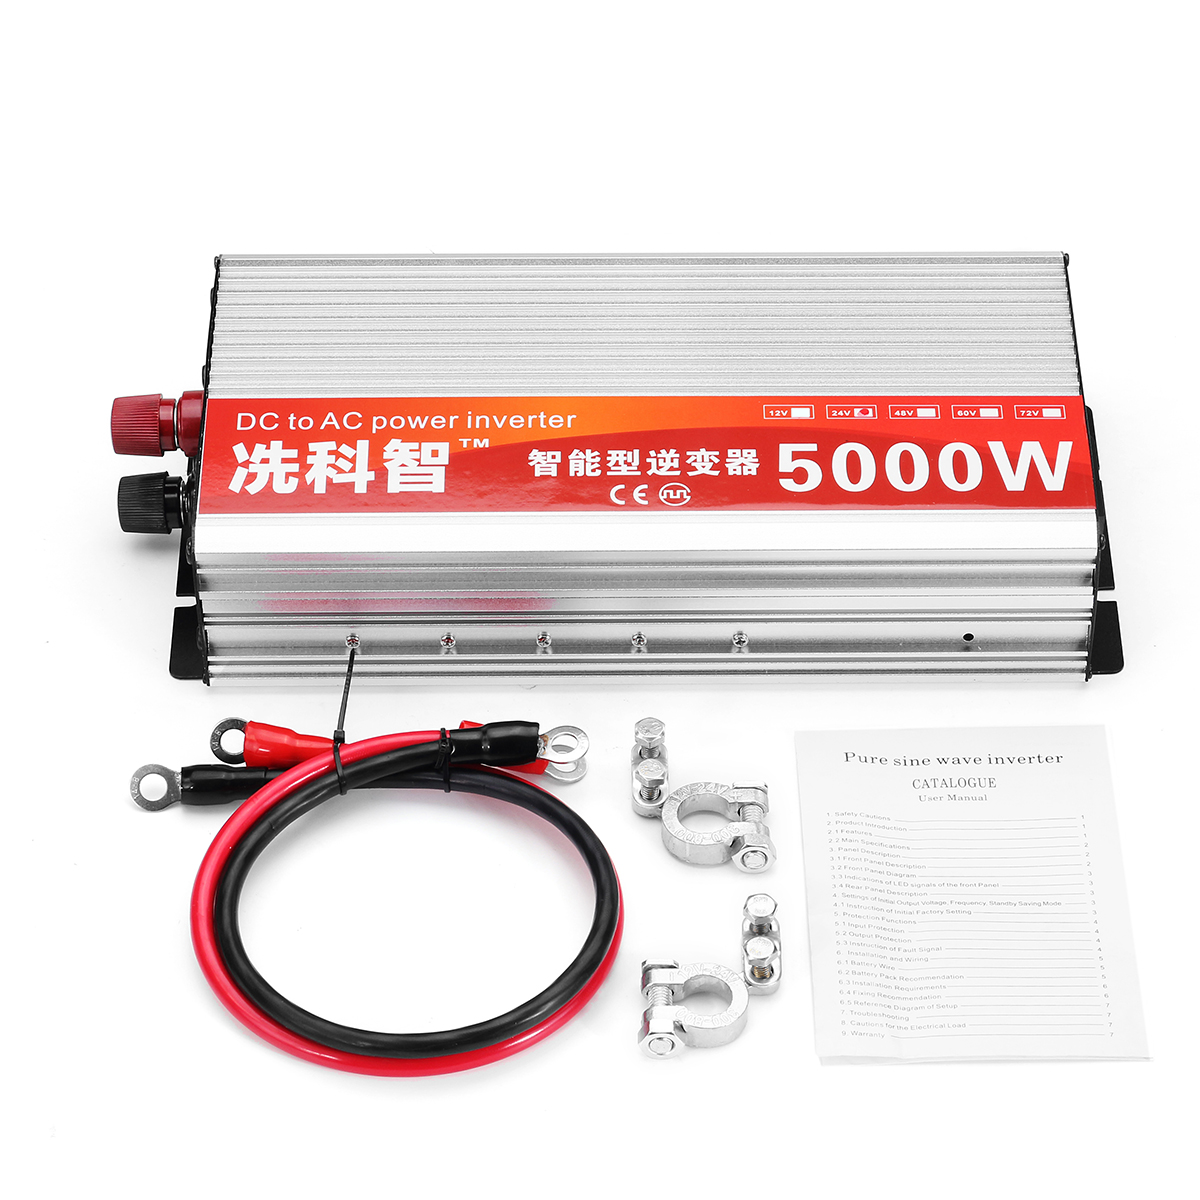 5000W Power Inverter